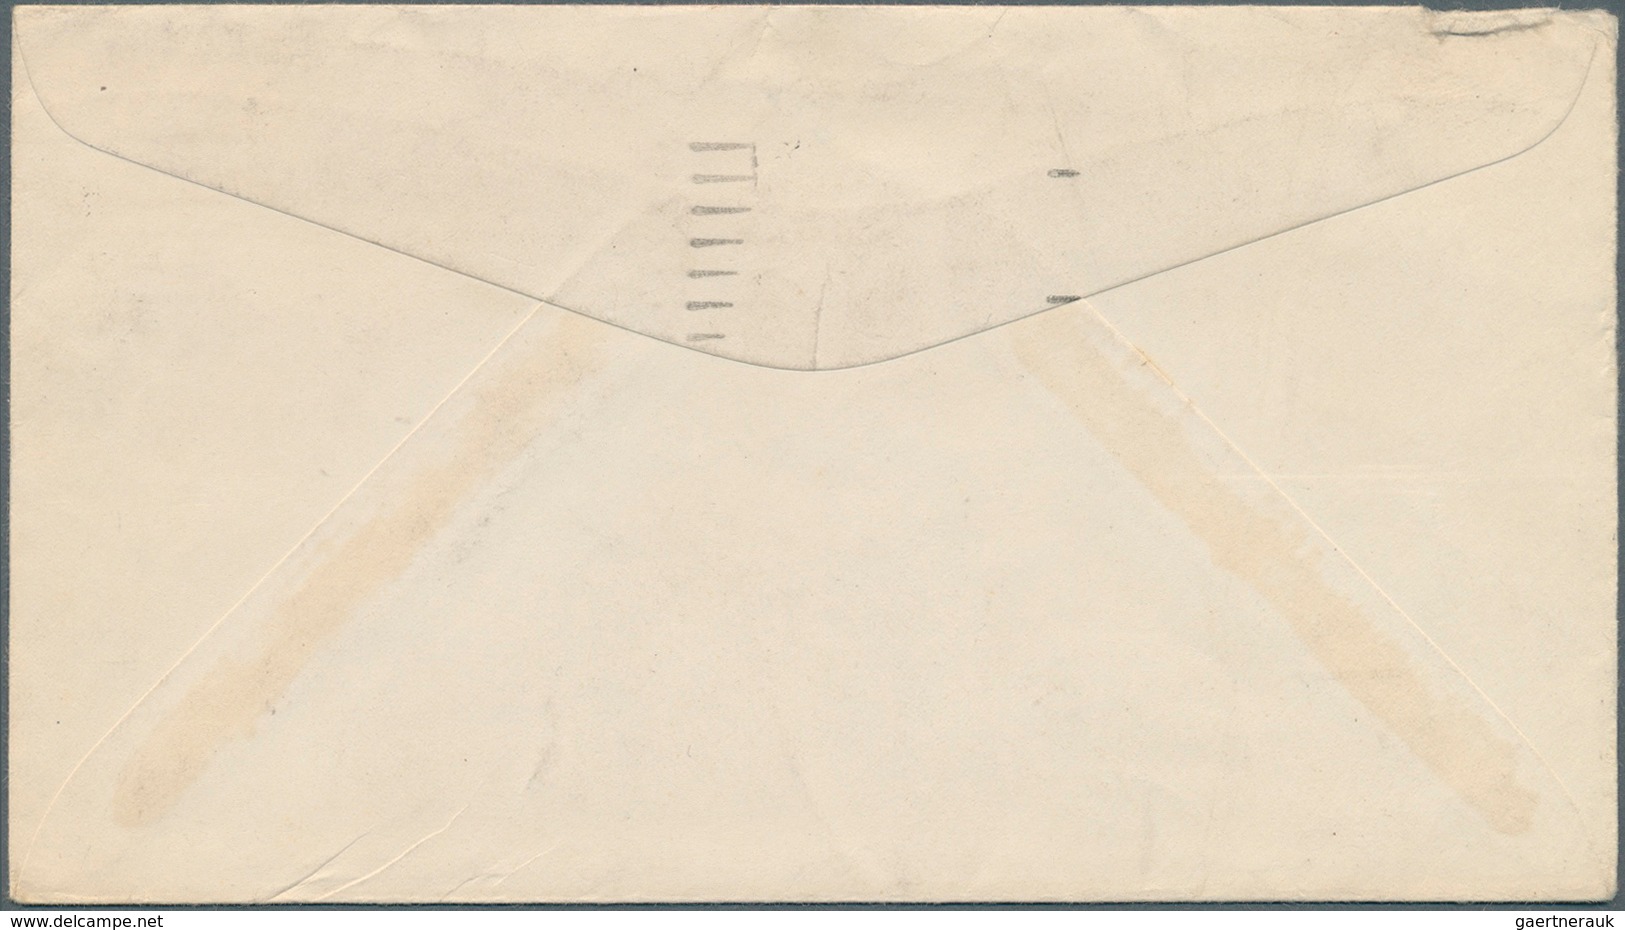 Vereinigte Staaten Von Amerika - Stempel: 1950, USA / MARSHALL-PLAN / PARTNERSHIP FOR PEACE, Sonders - Postal History